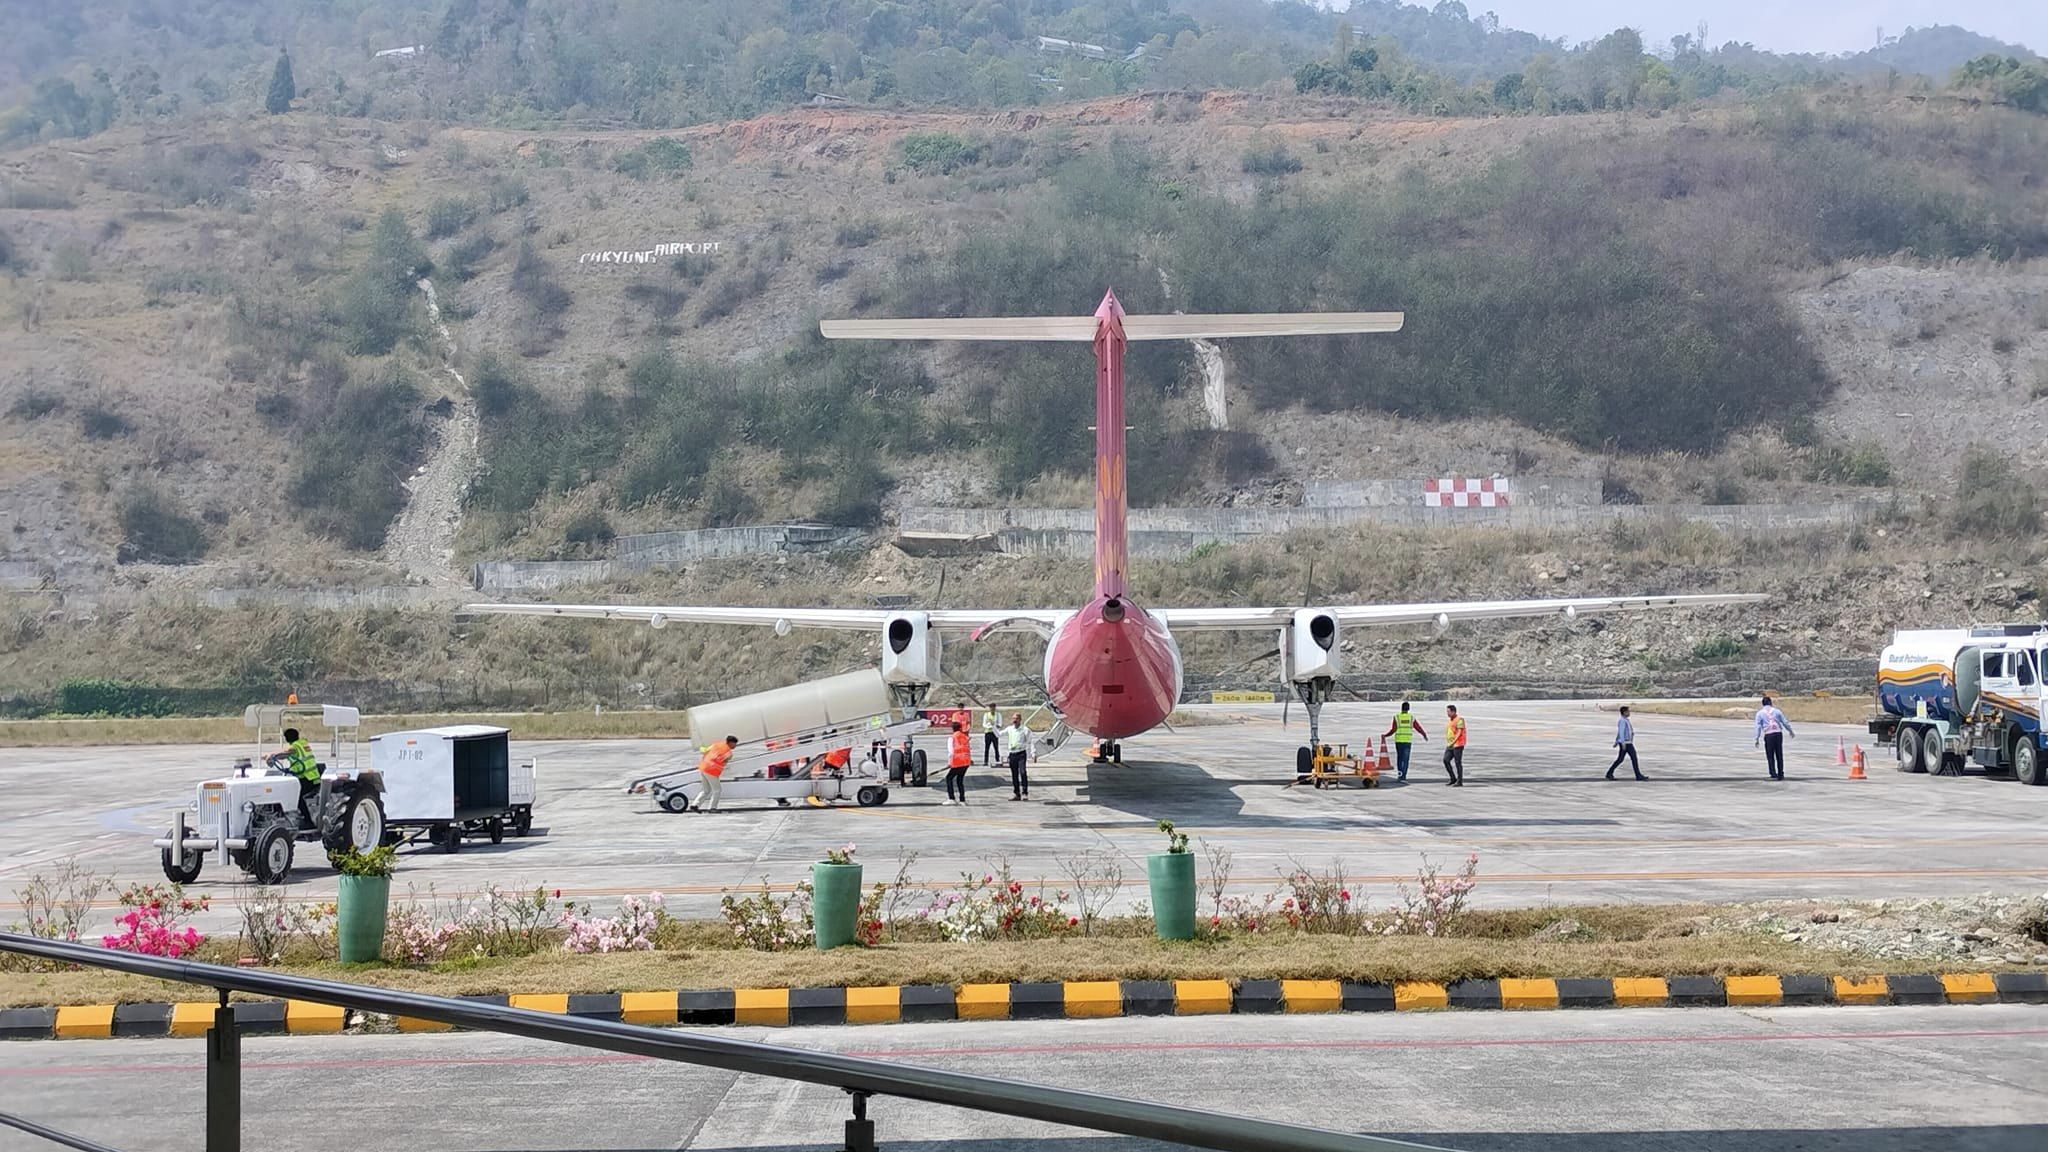 Commercial Flight Operations Resume at Pakyong Airport